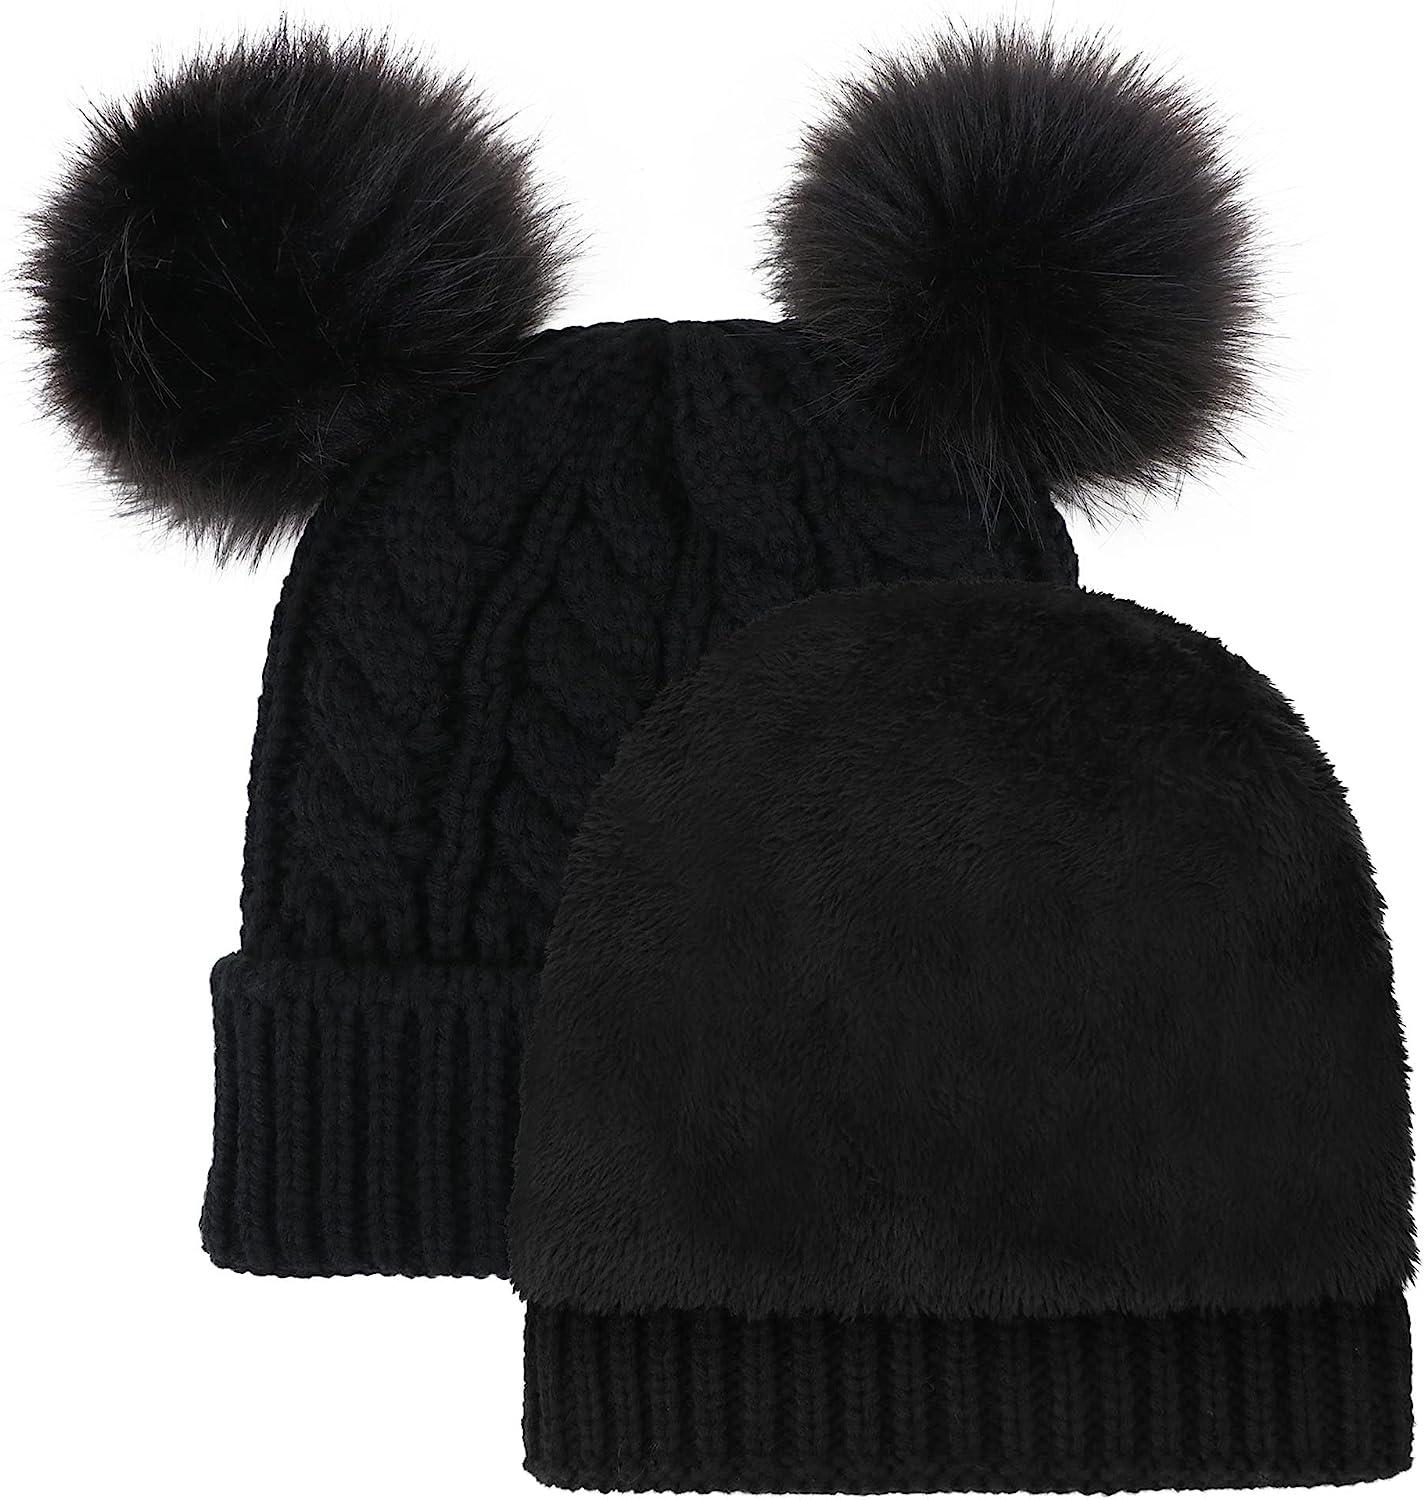 Arctica Pom Hat